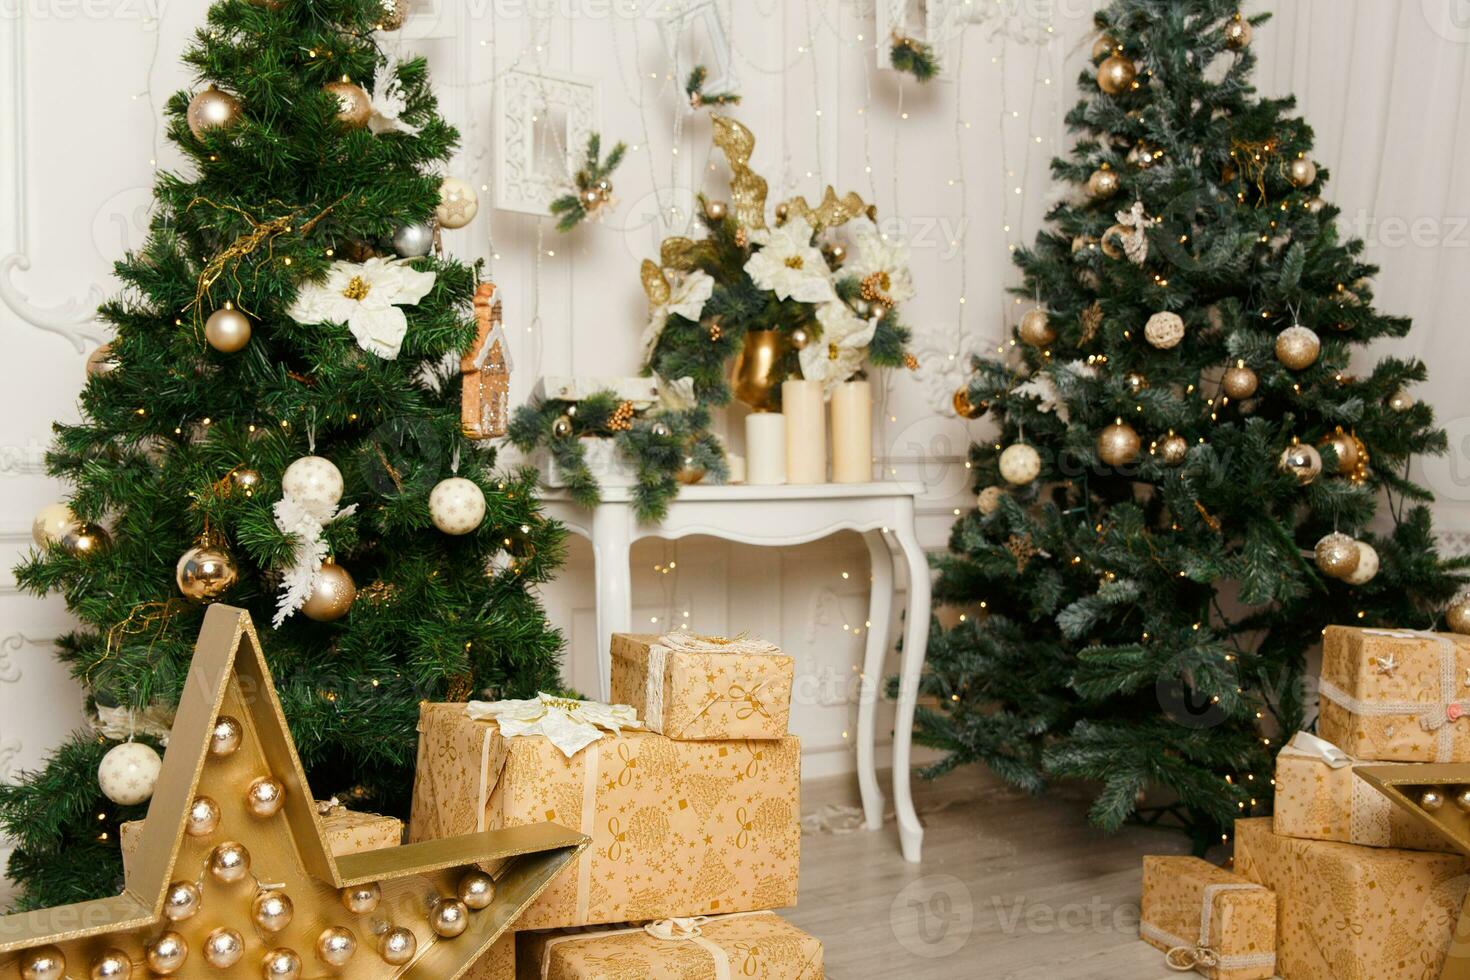 Photo of luxury gift boxes under Christmas tree